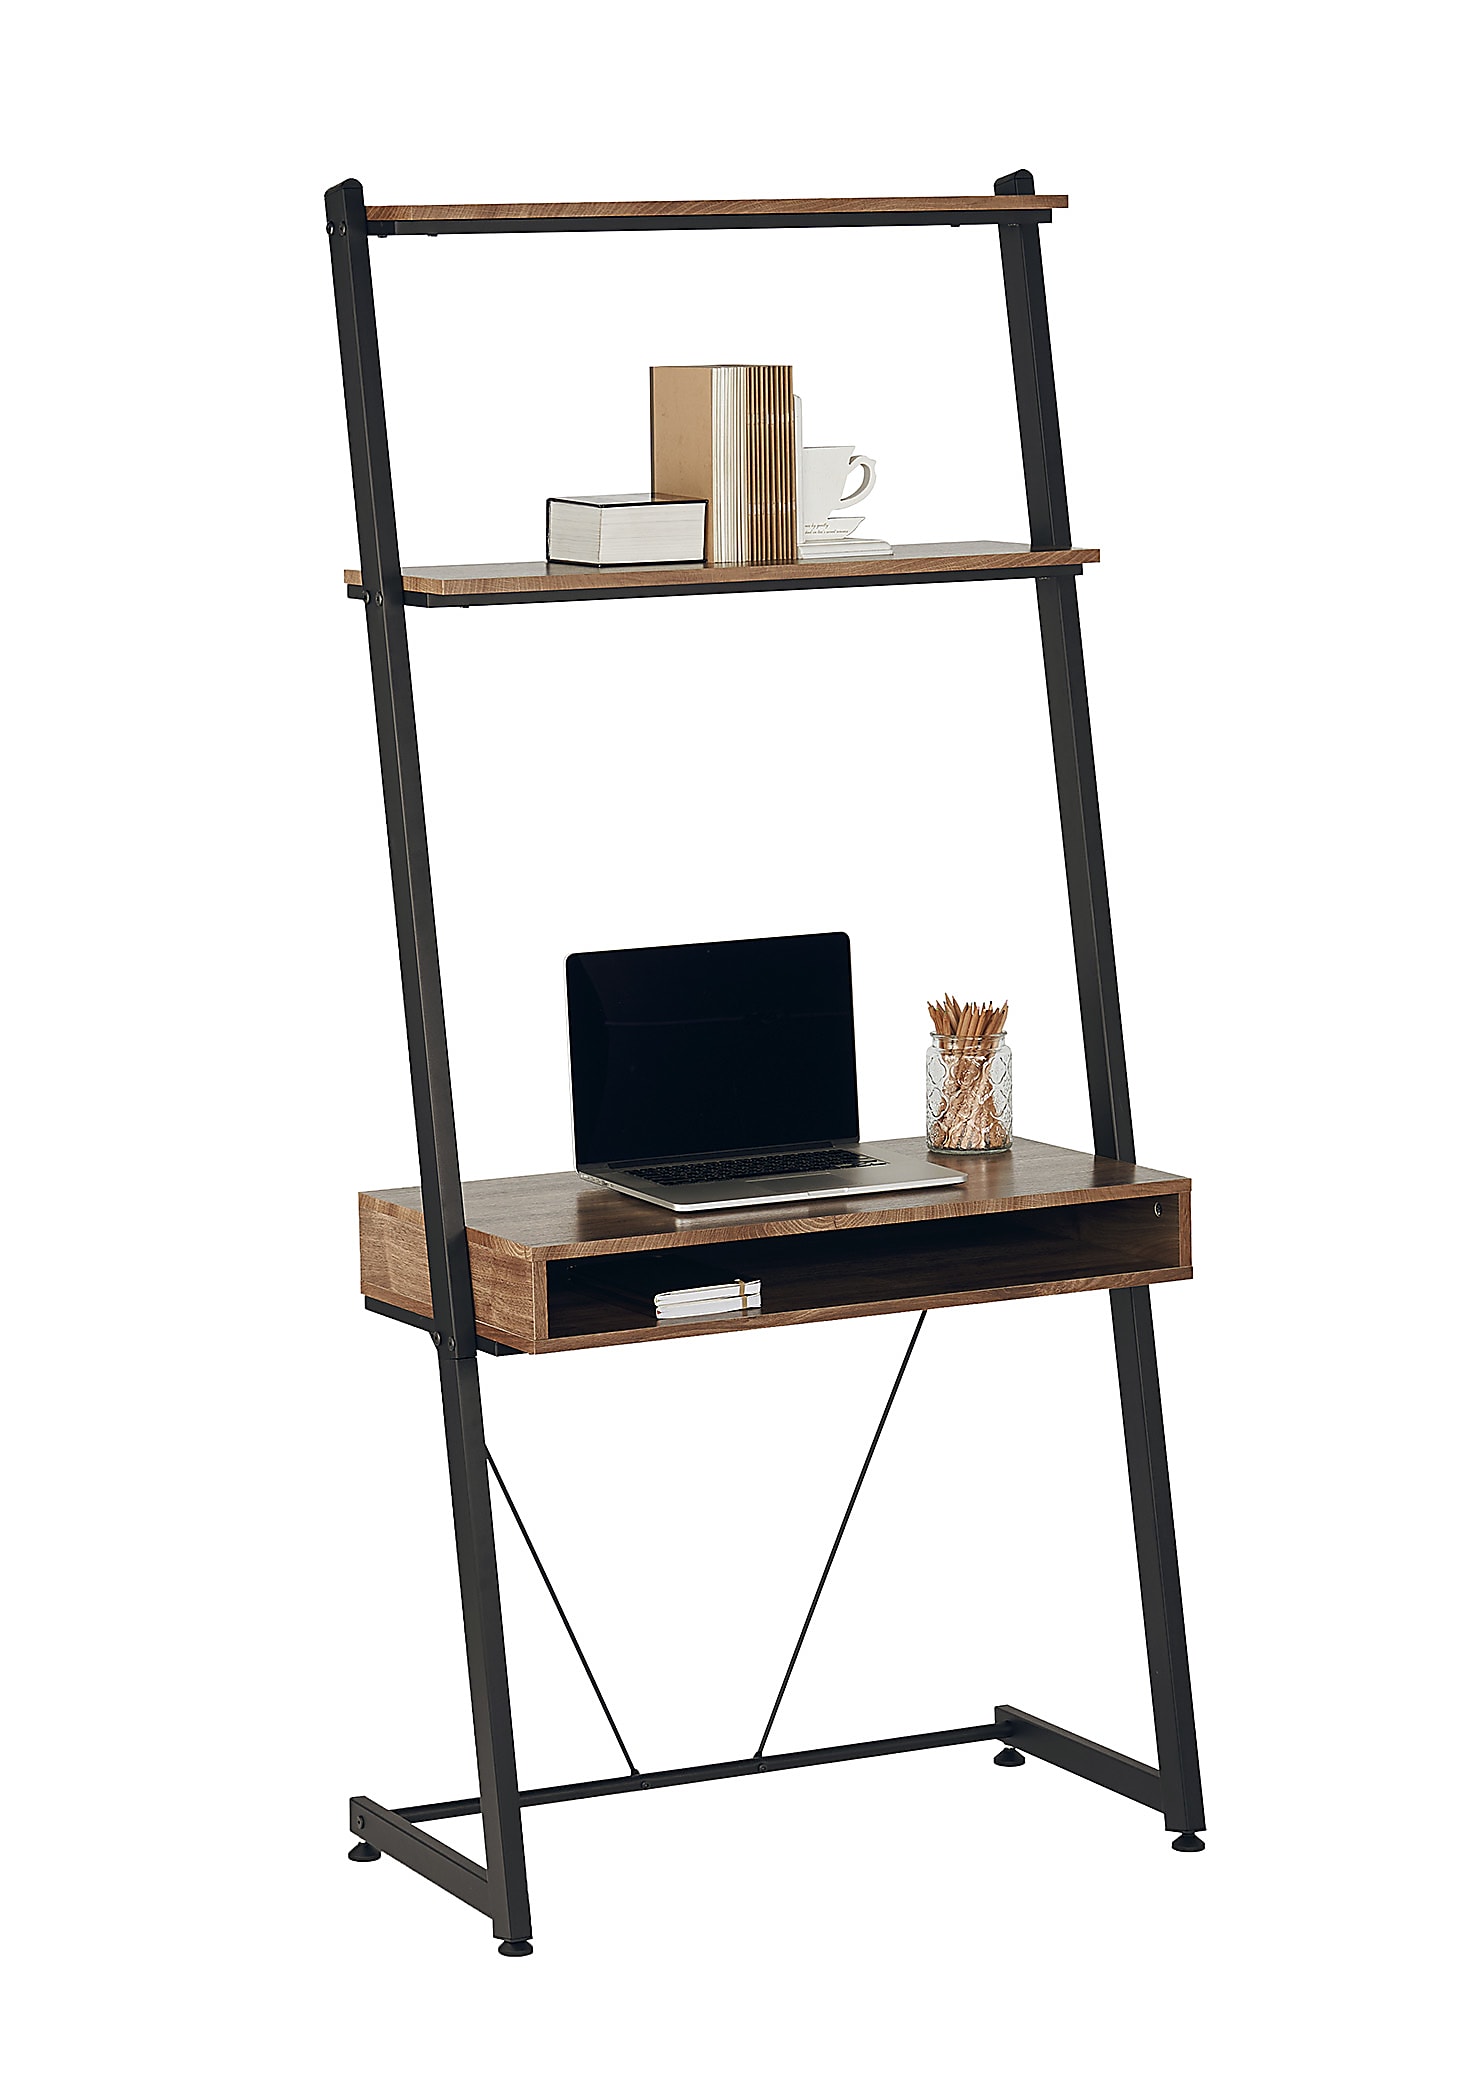 35" Realspace Belling Leaning Computer Desk (Modern Oak) $80 + Free Shipping